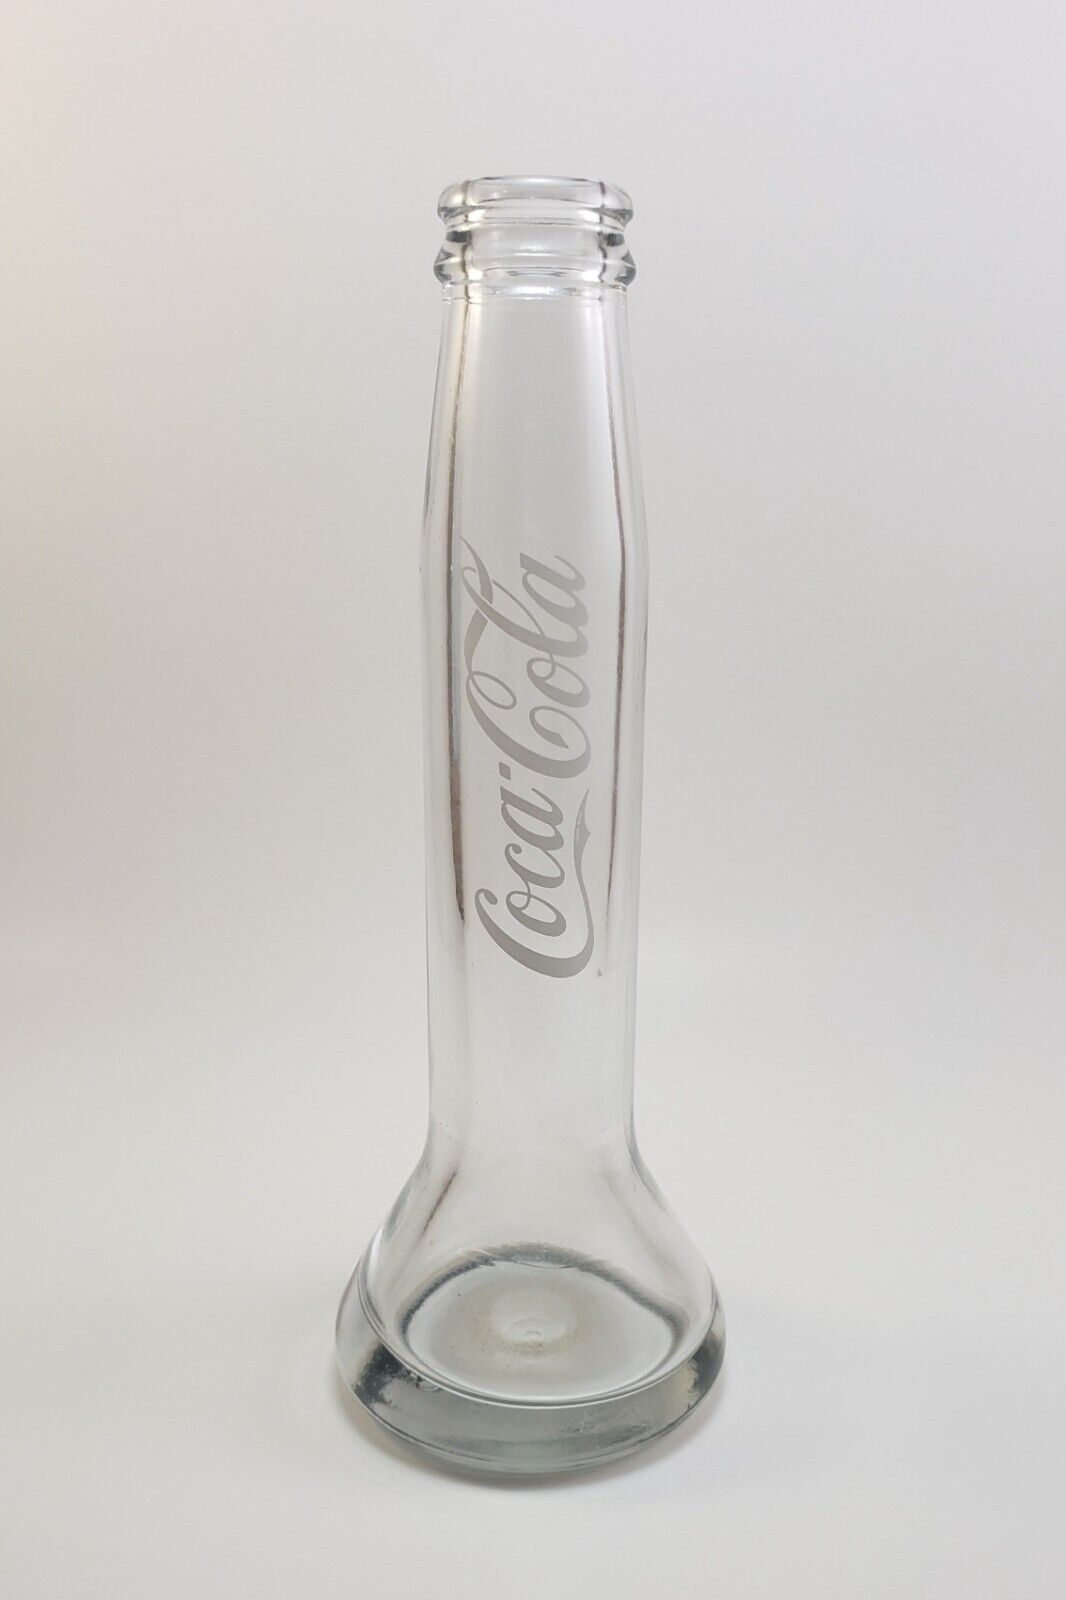 Very Rare Vintage Coca-Cola Clear Glass Syrup Testing Bottle w/Coca-Cola Script